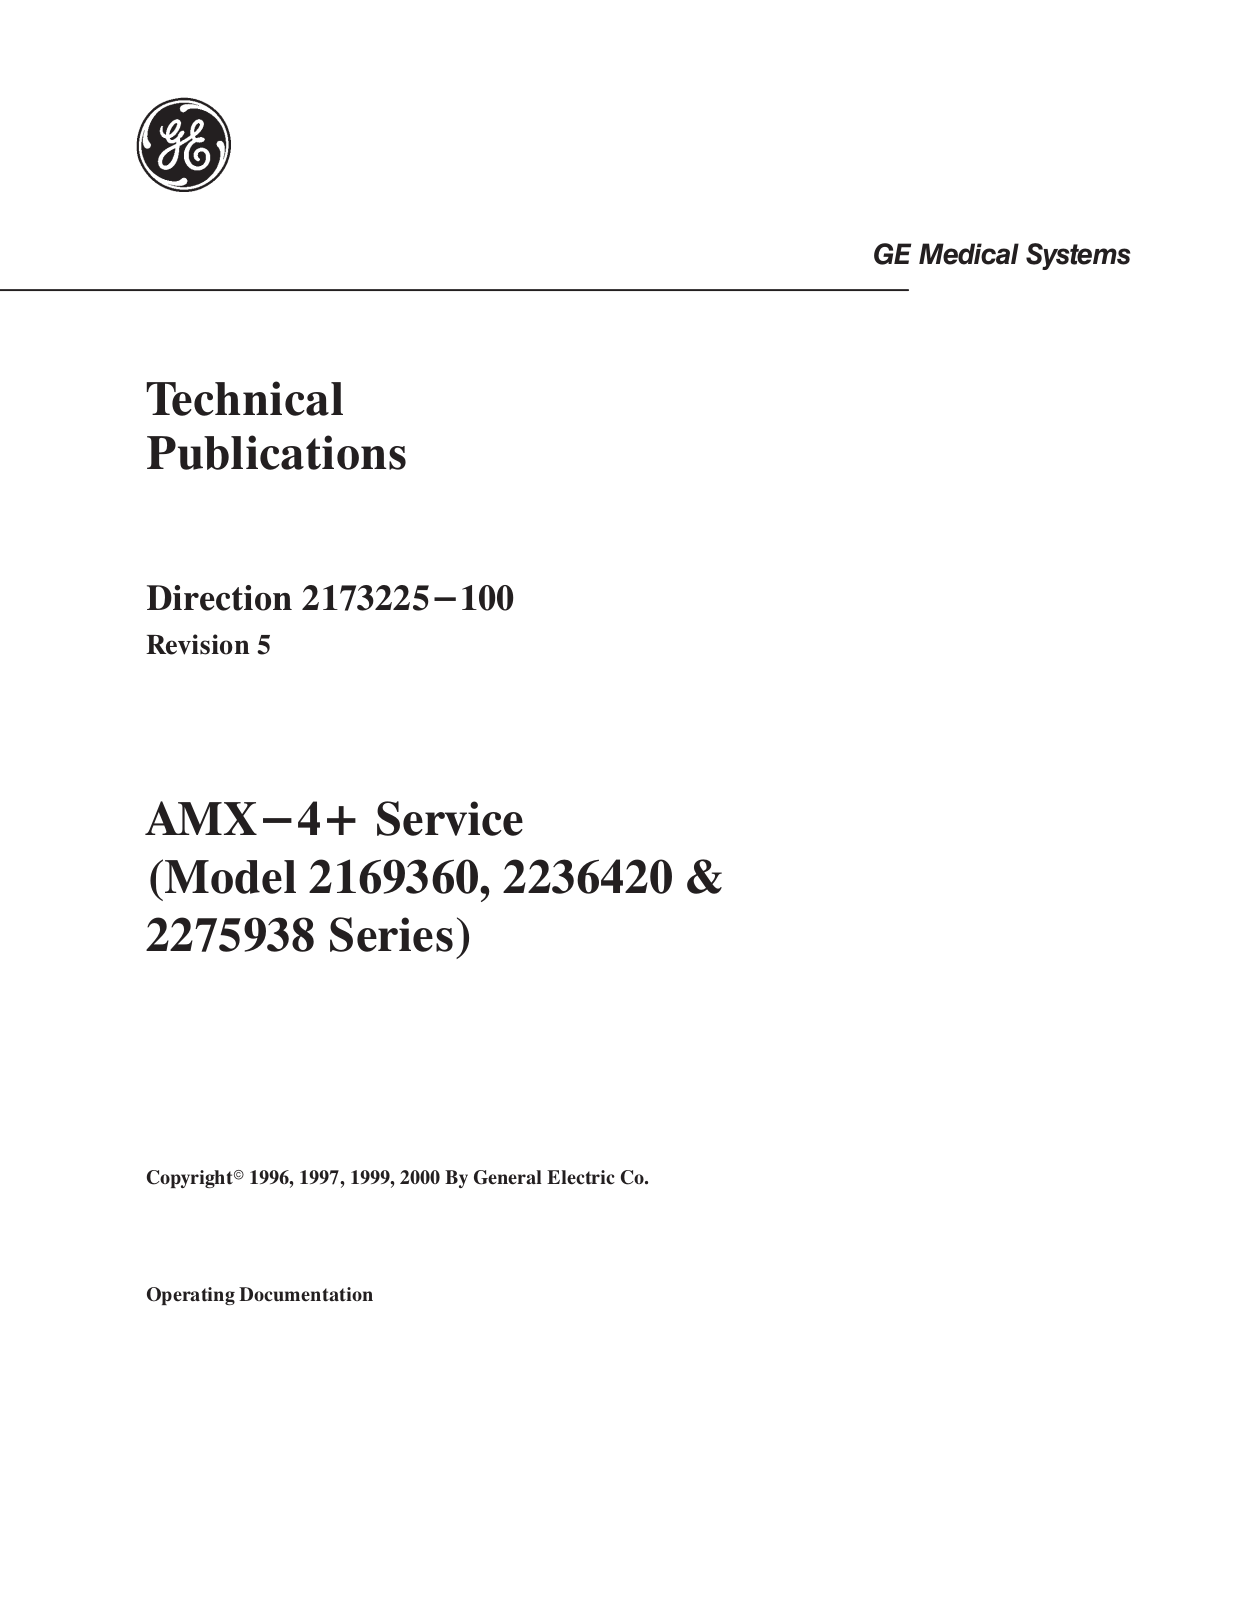 GE AMX 4 Plus User manual